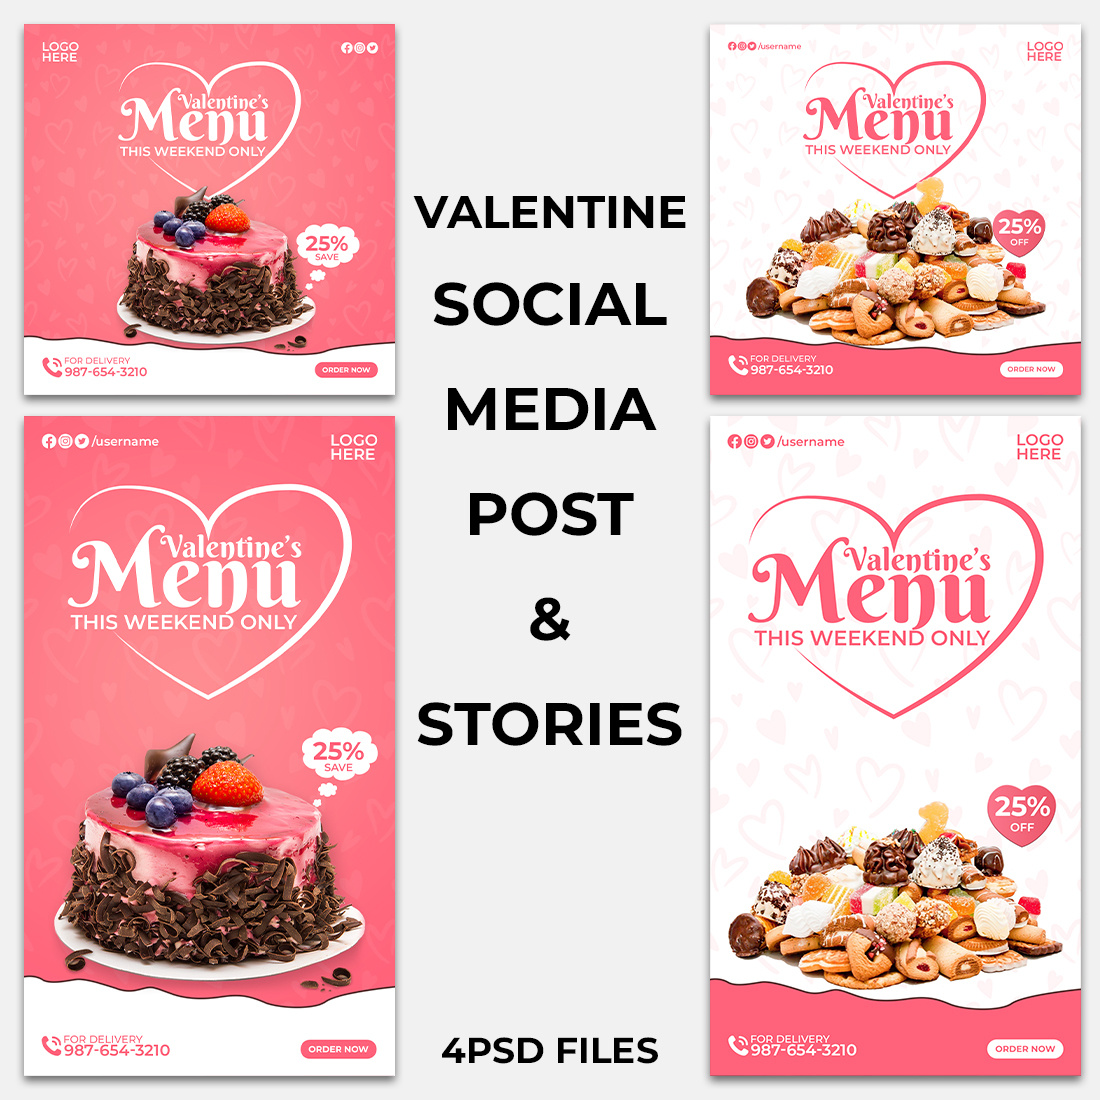 2 Valentine Social Media Templates Pack cover image.